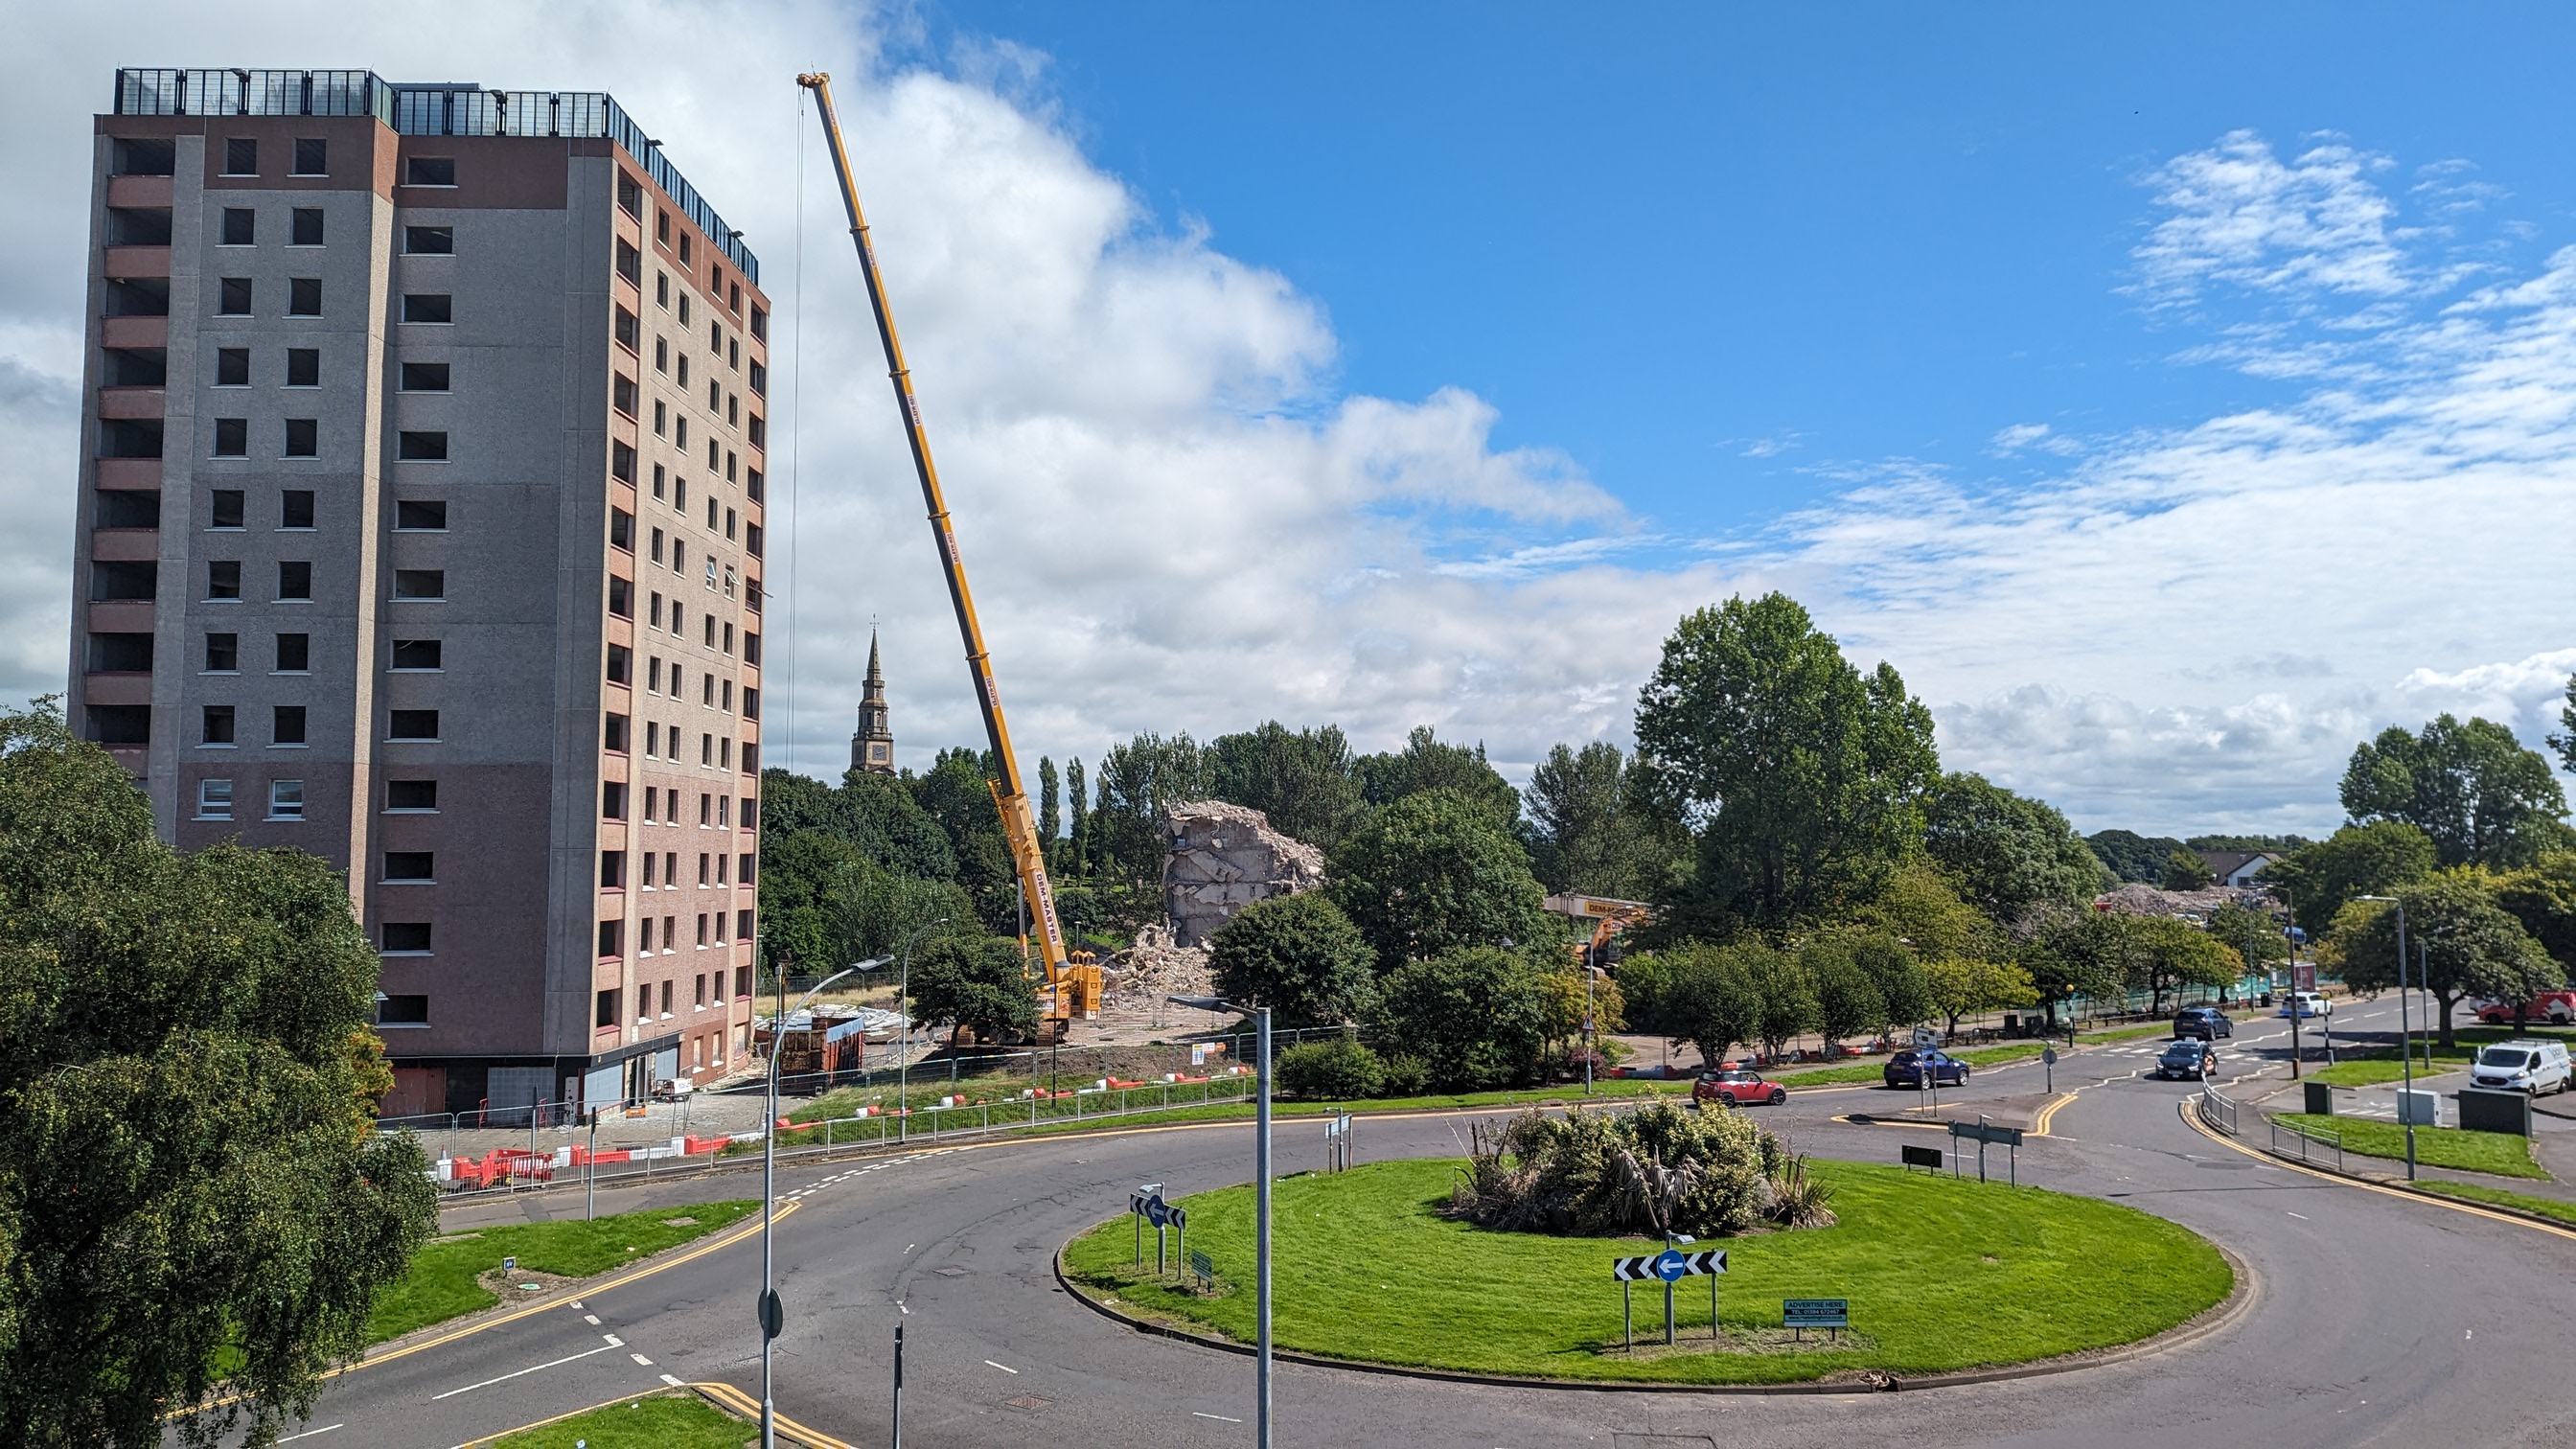 Irvine high flats fully demolished